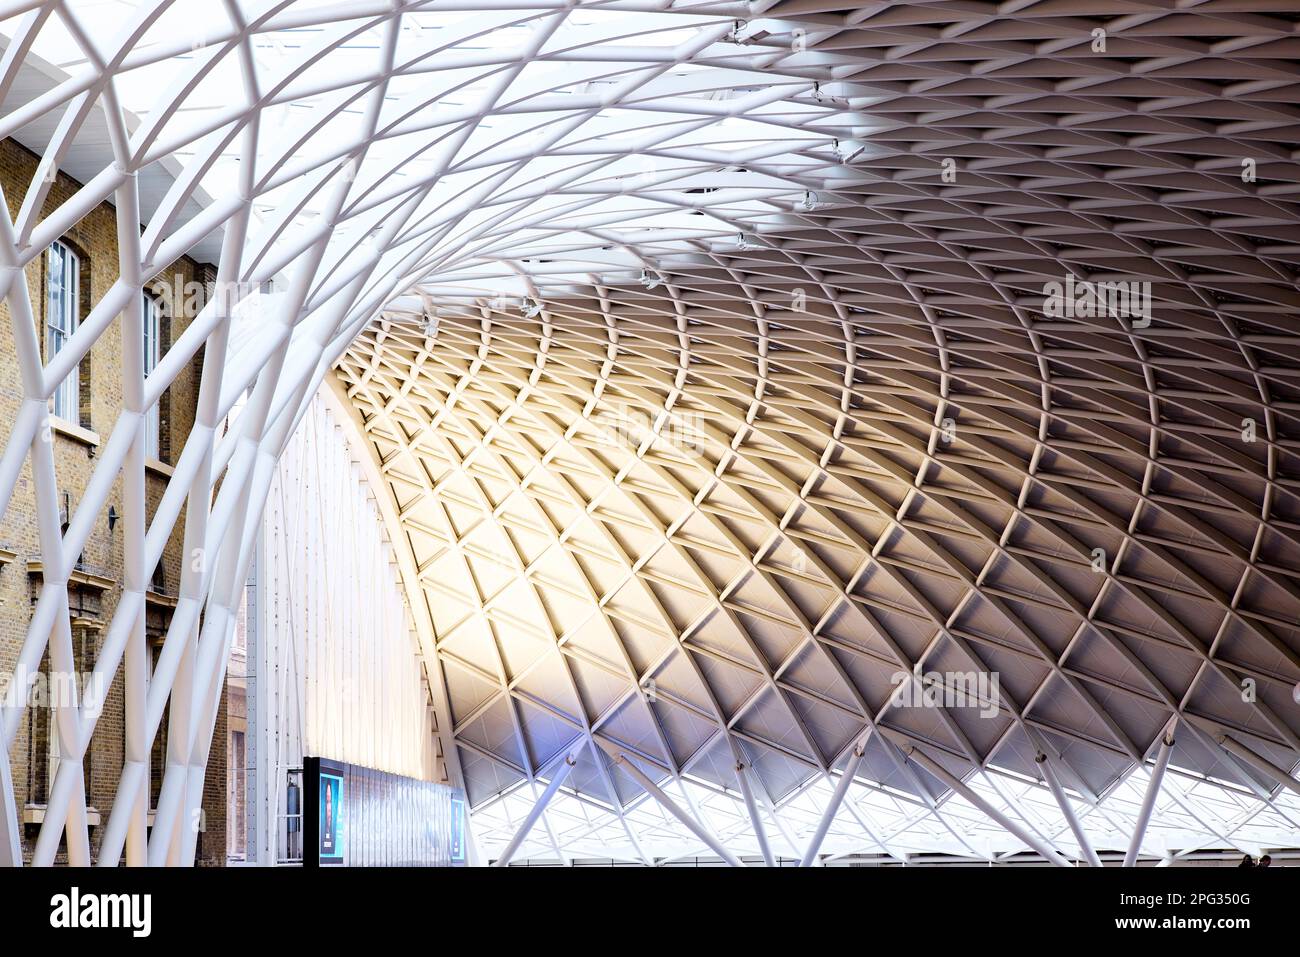 Kings Cross Station - London Stock Photo